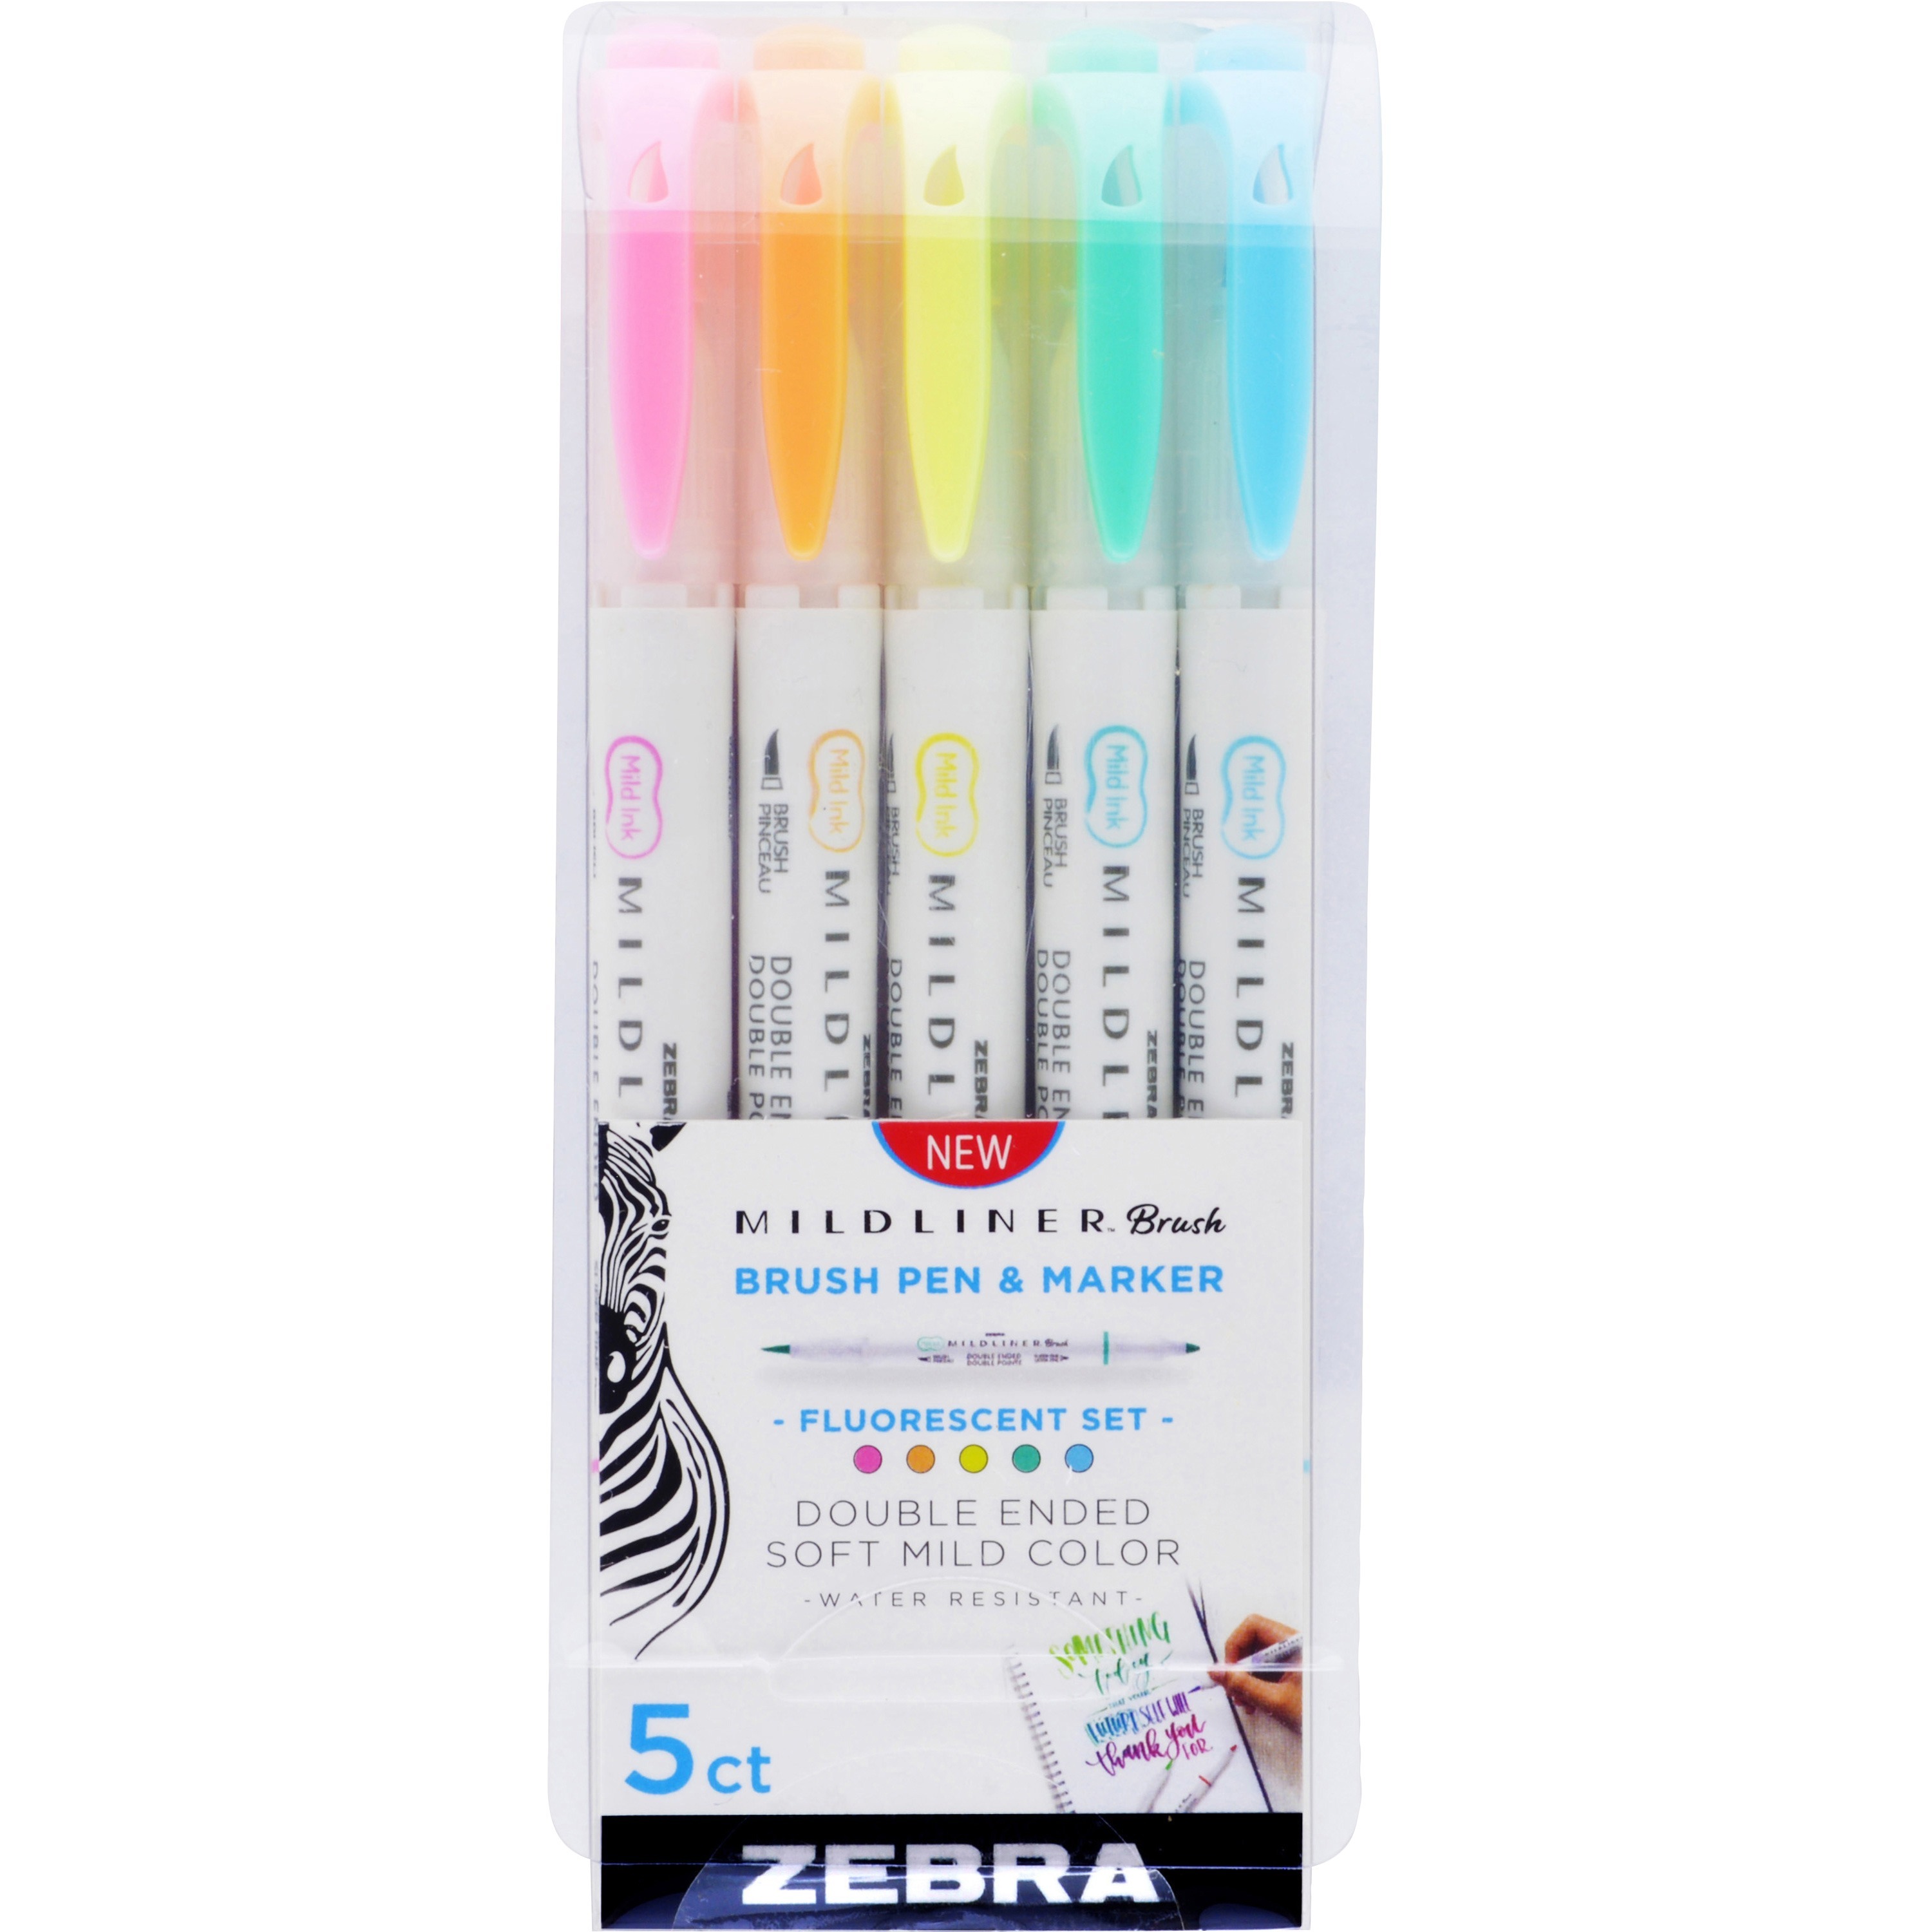 Zebra Journaling Set- Mildliner/Sarasa 14 Pack